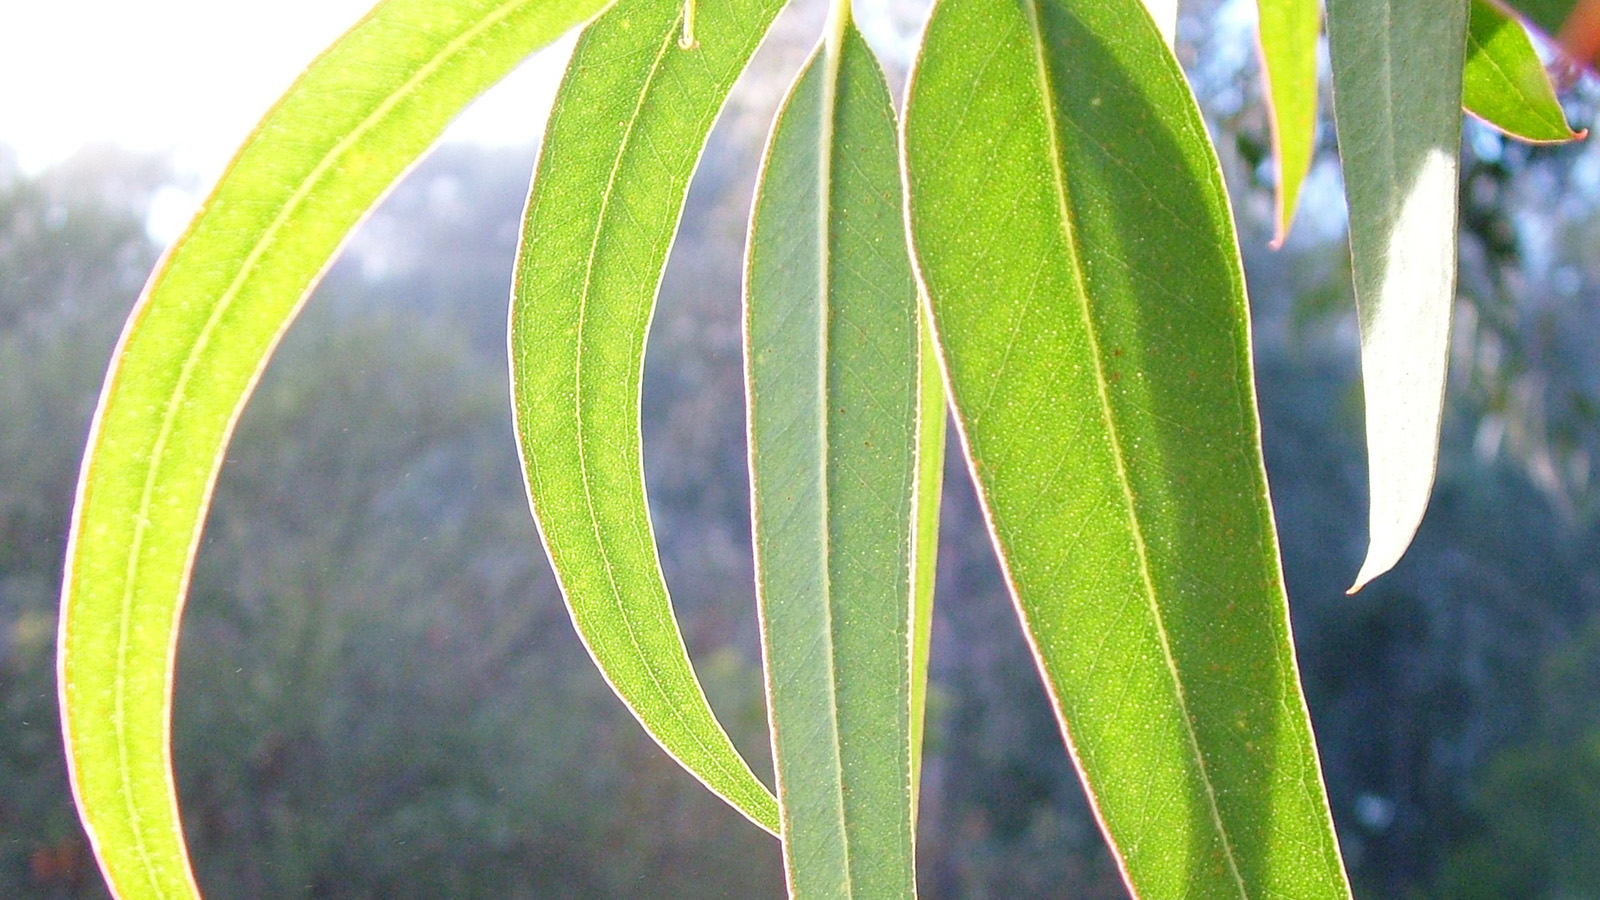 Flora: Eucalyptus leaves